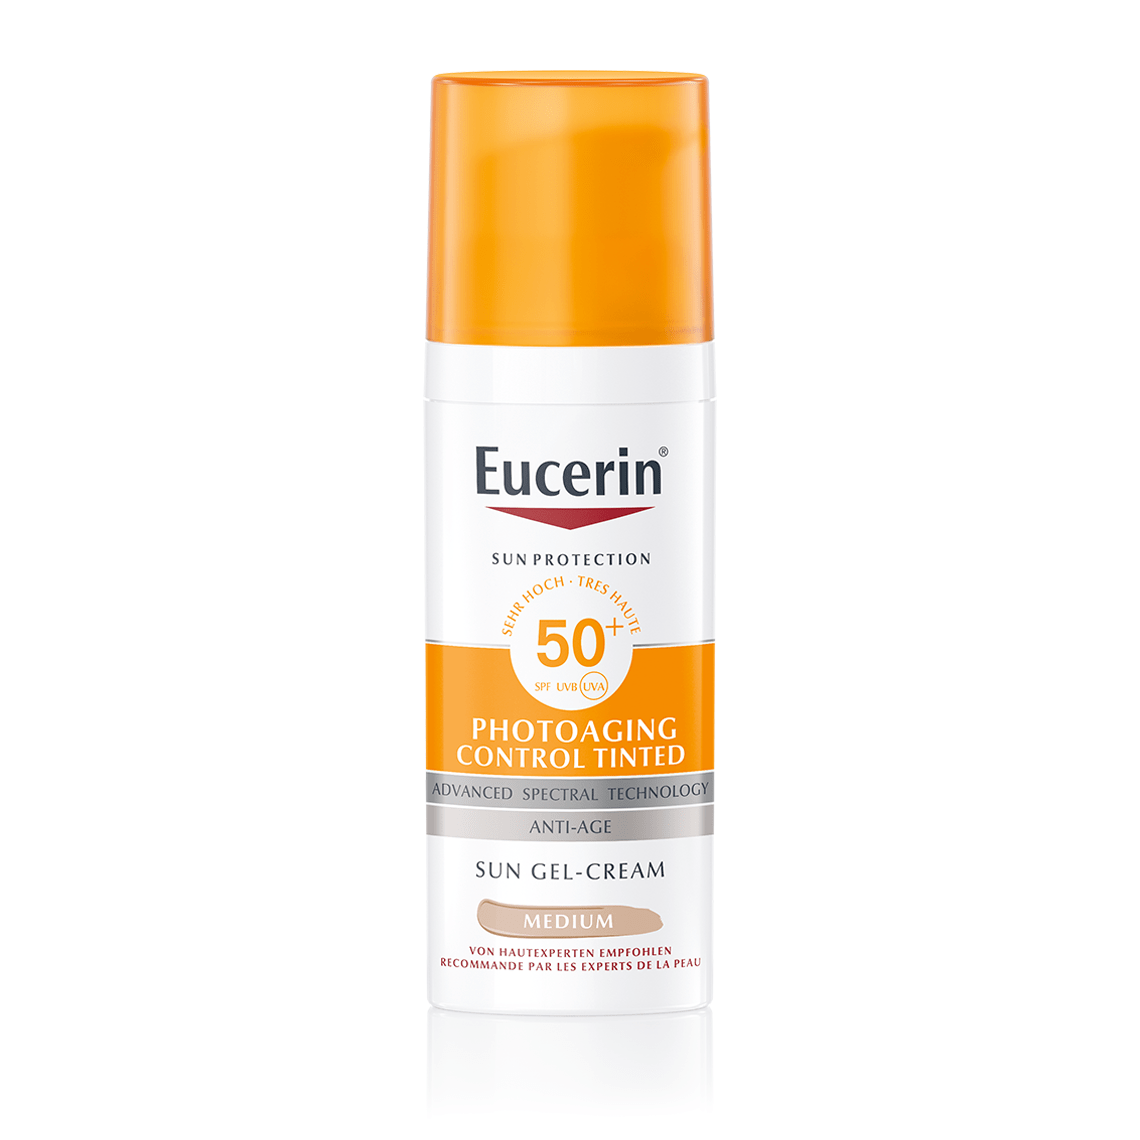 Eucerin Photoaging Control Tinted Face Sun Gel-Creme LSF50+ Mittel